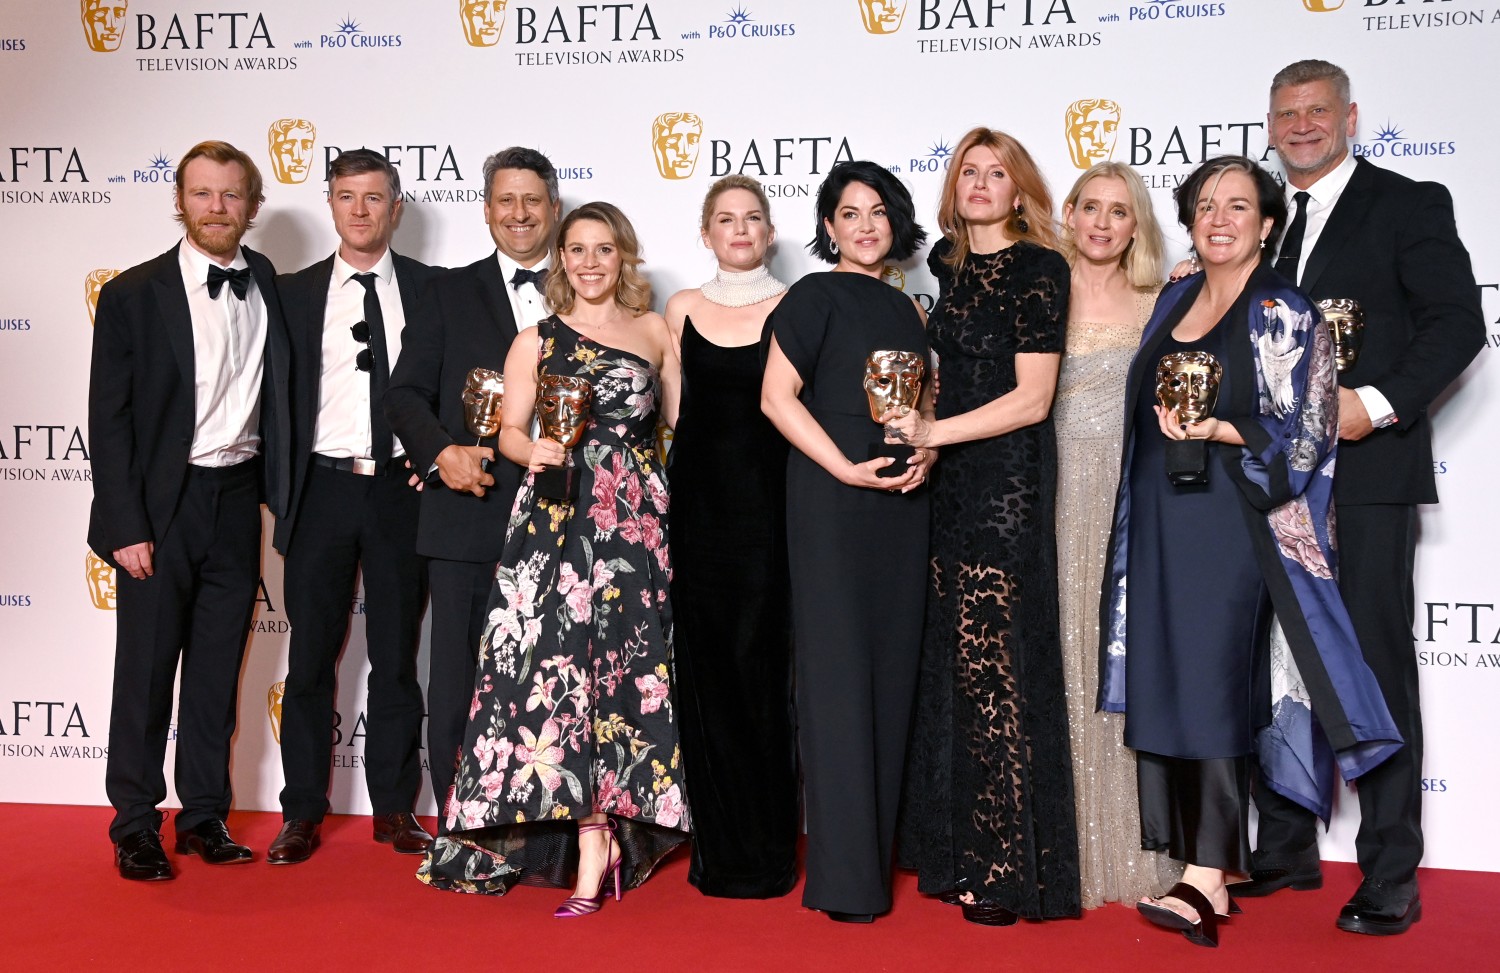 Bafta Film Awards 2022 red carpet in pictures - BBC News